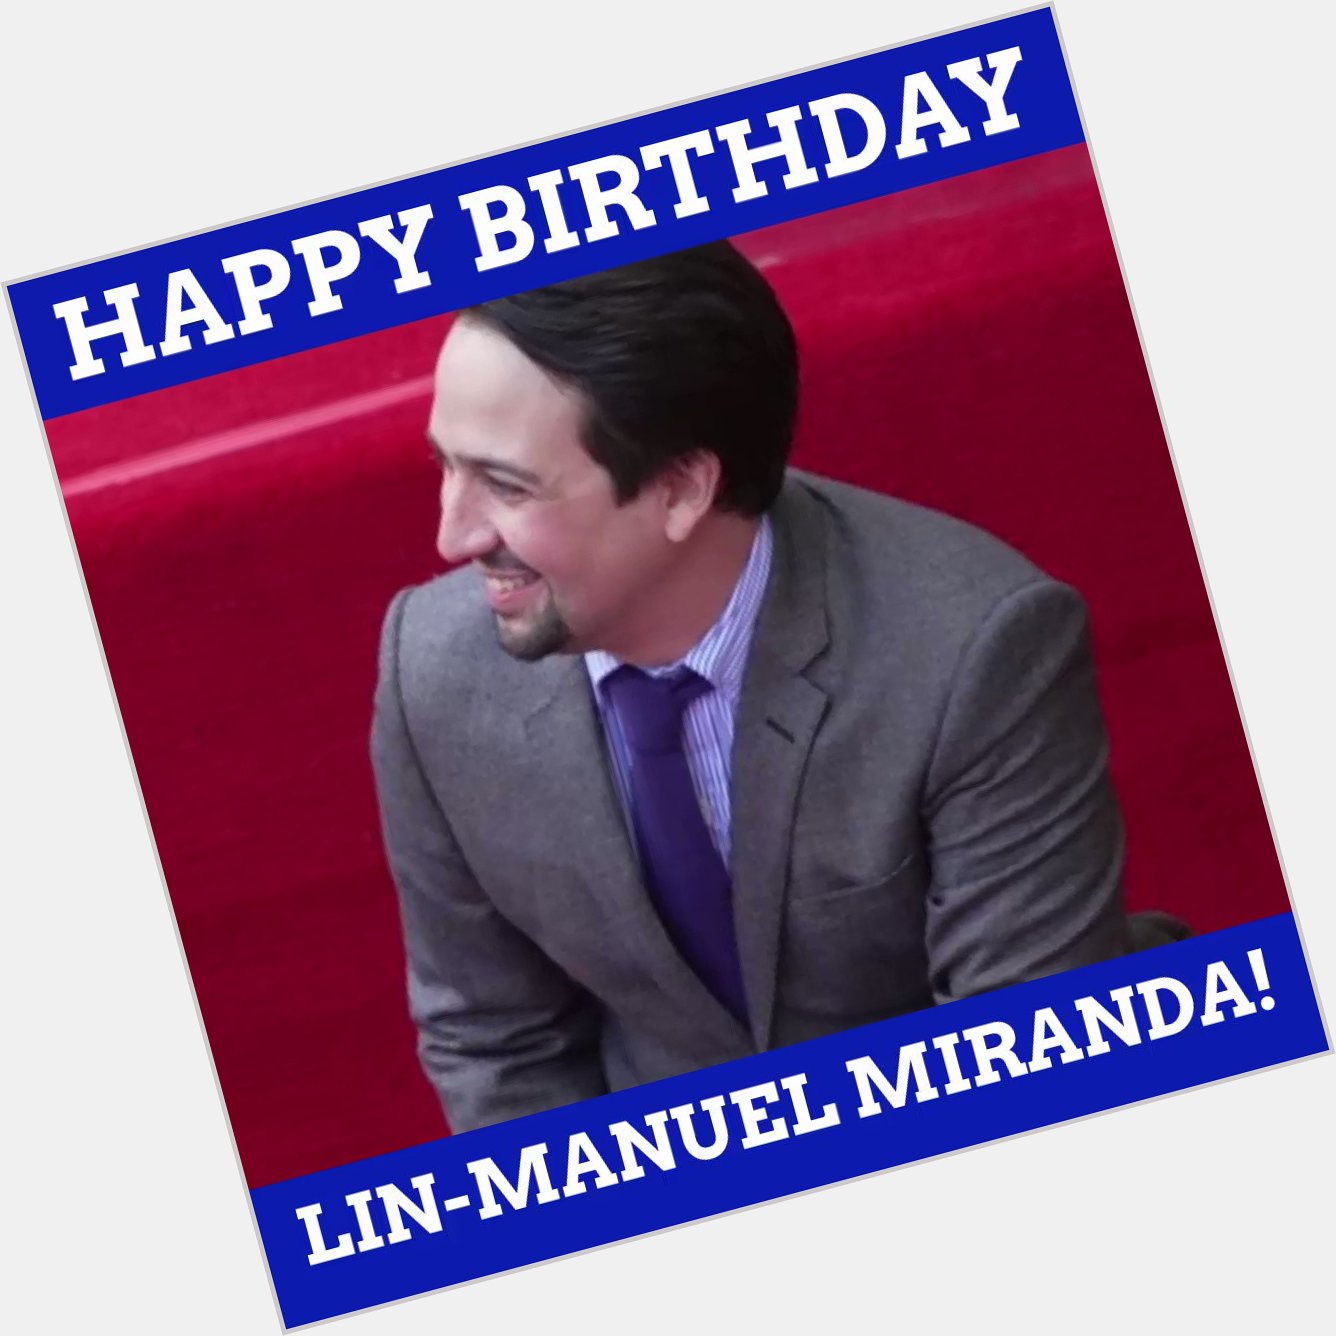 Happy birthday, Miranda!  